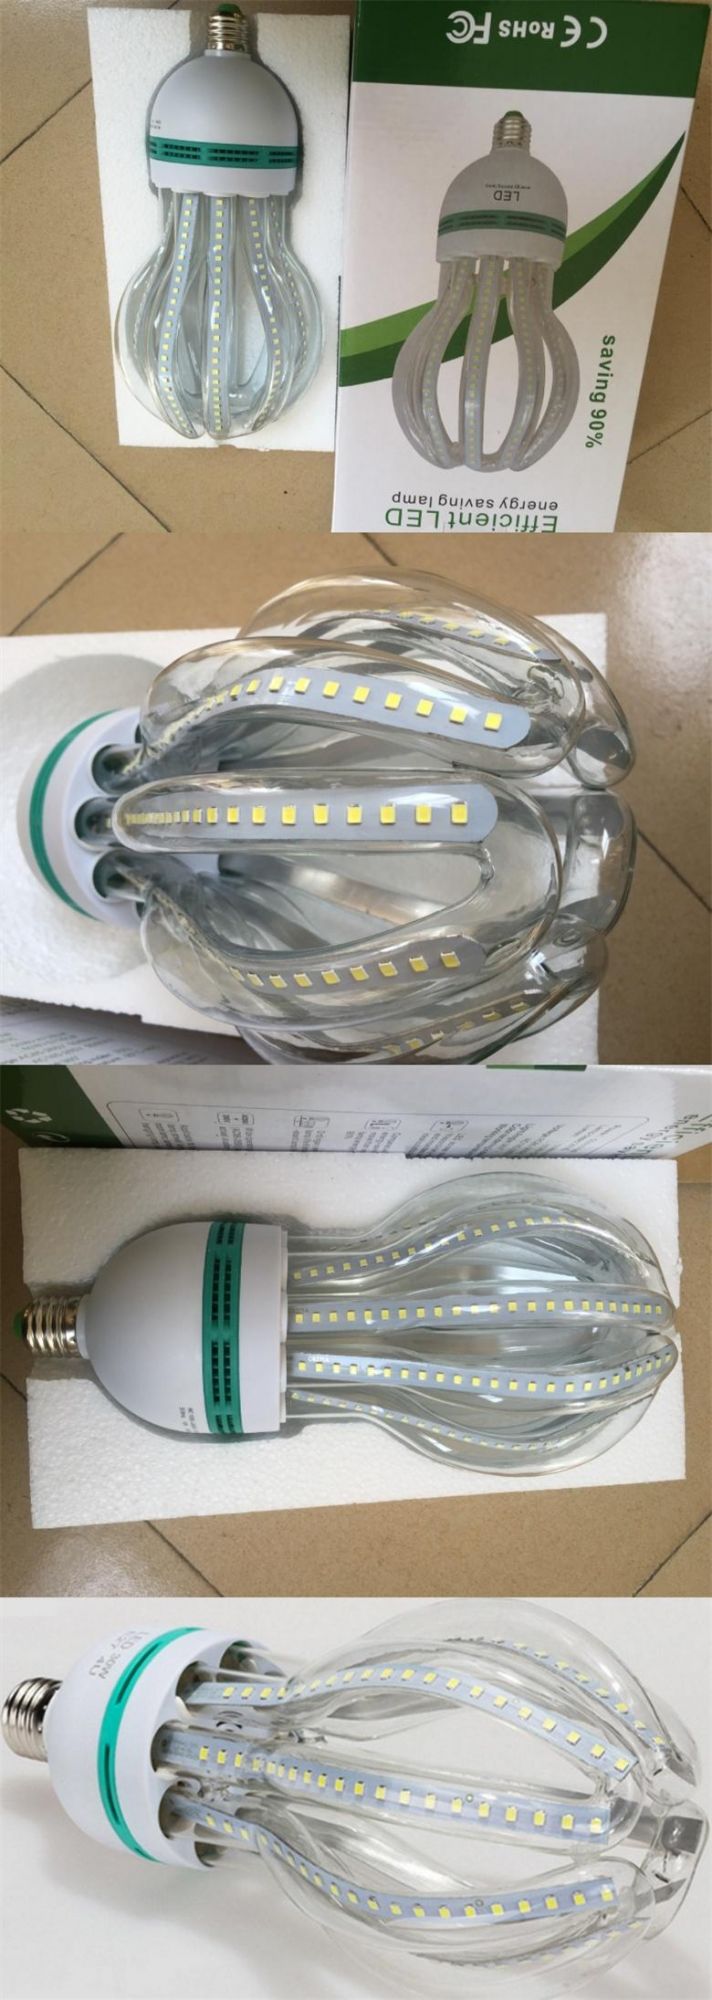 60W E27 6u Highlight Glass Clear Milky Lotus Shape LED Energy Saving Lamp